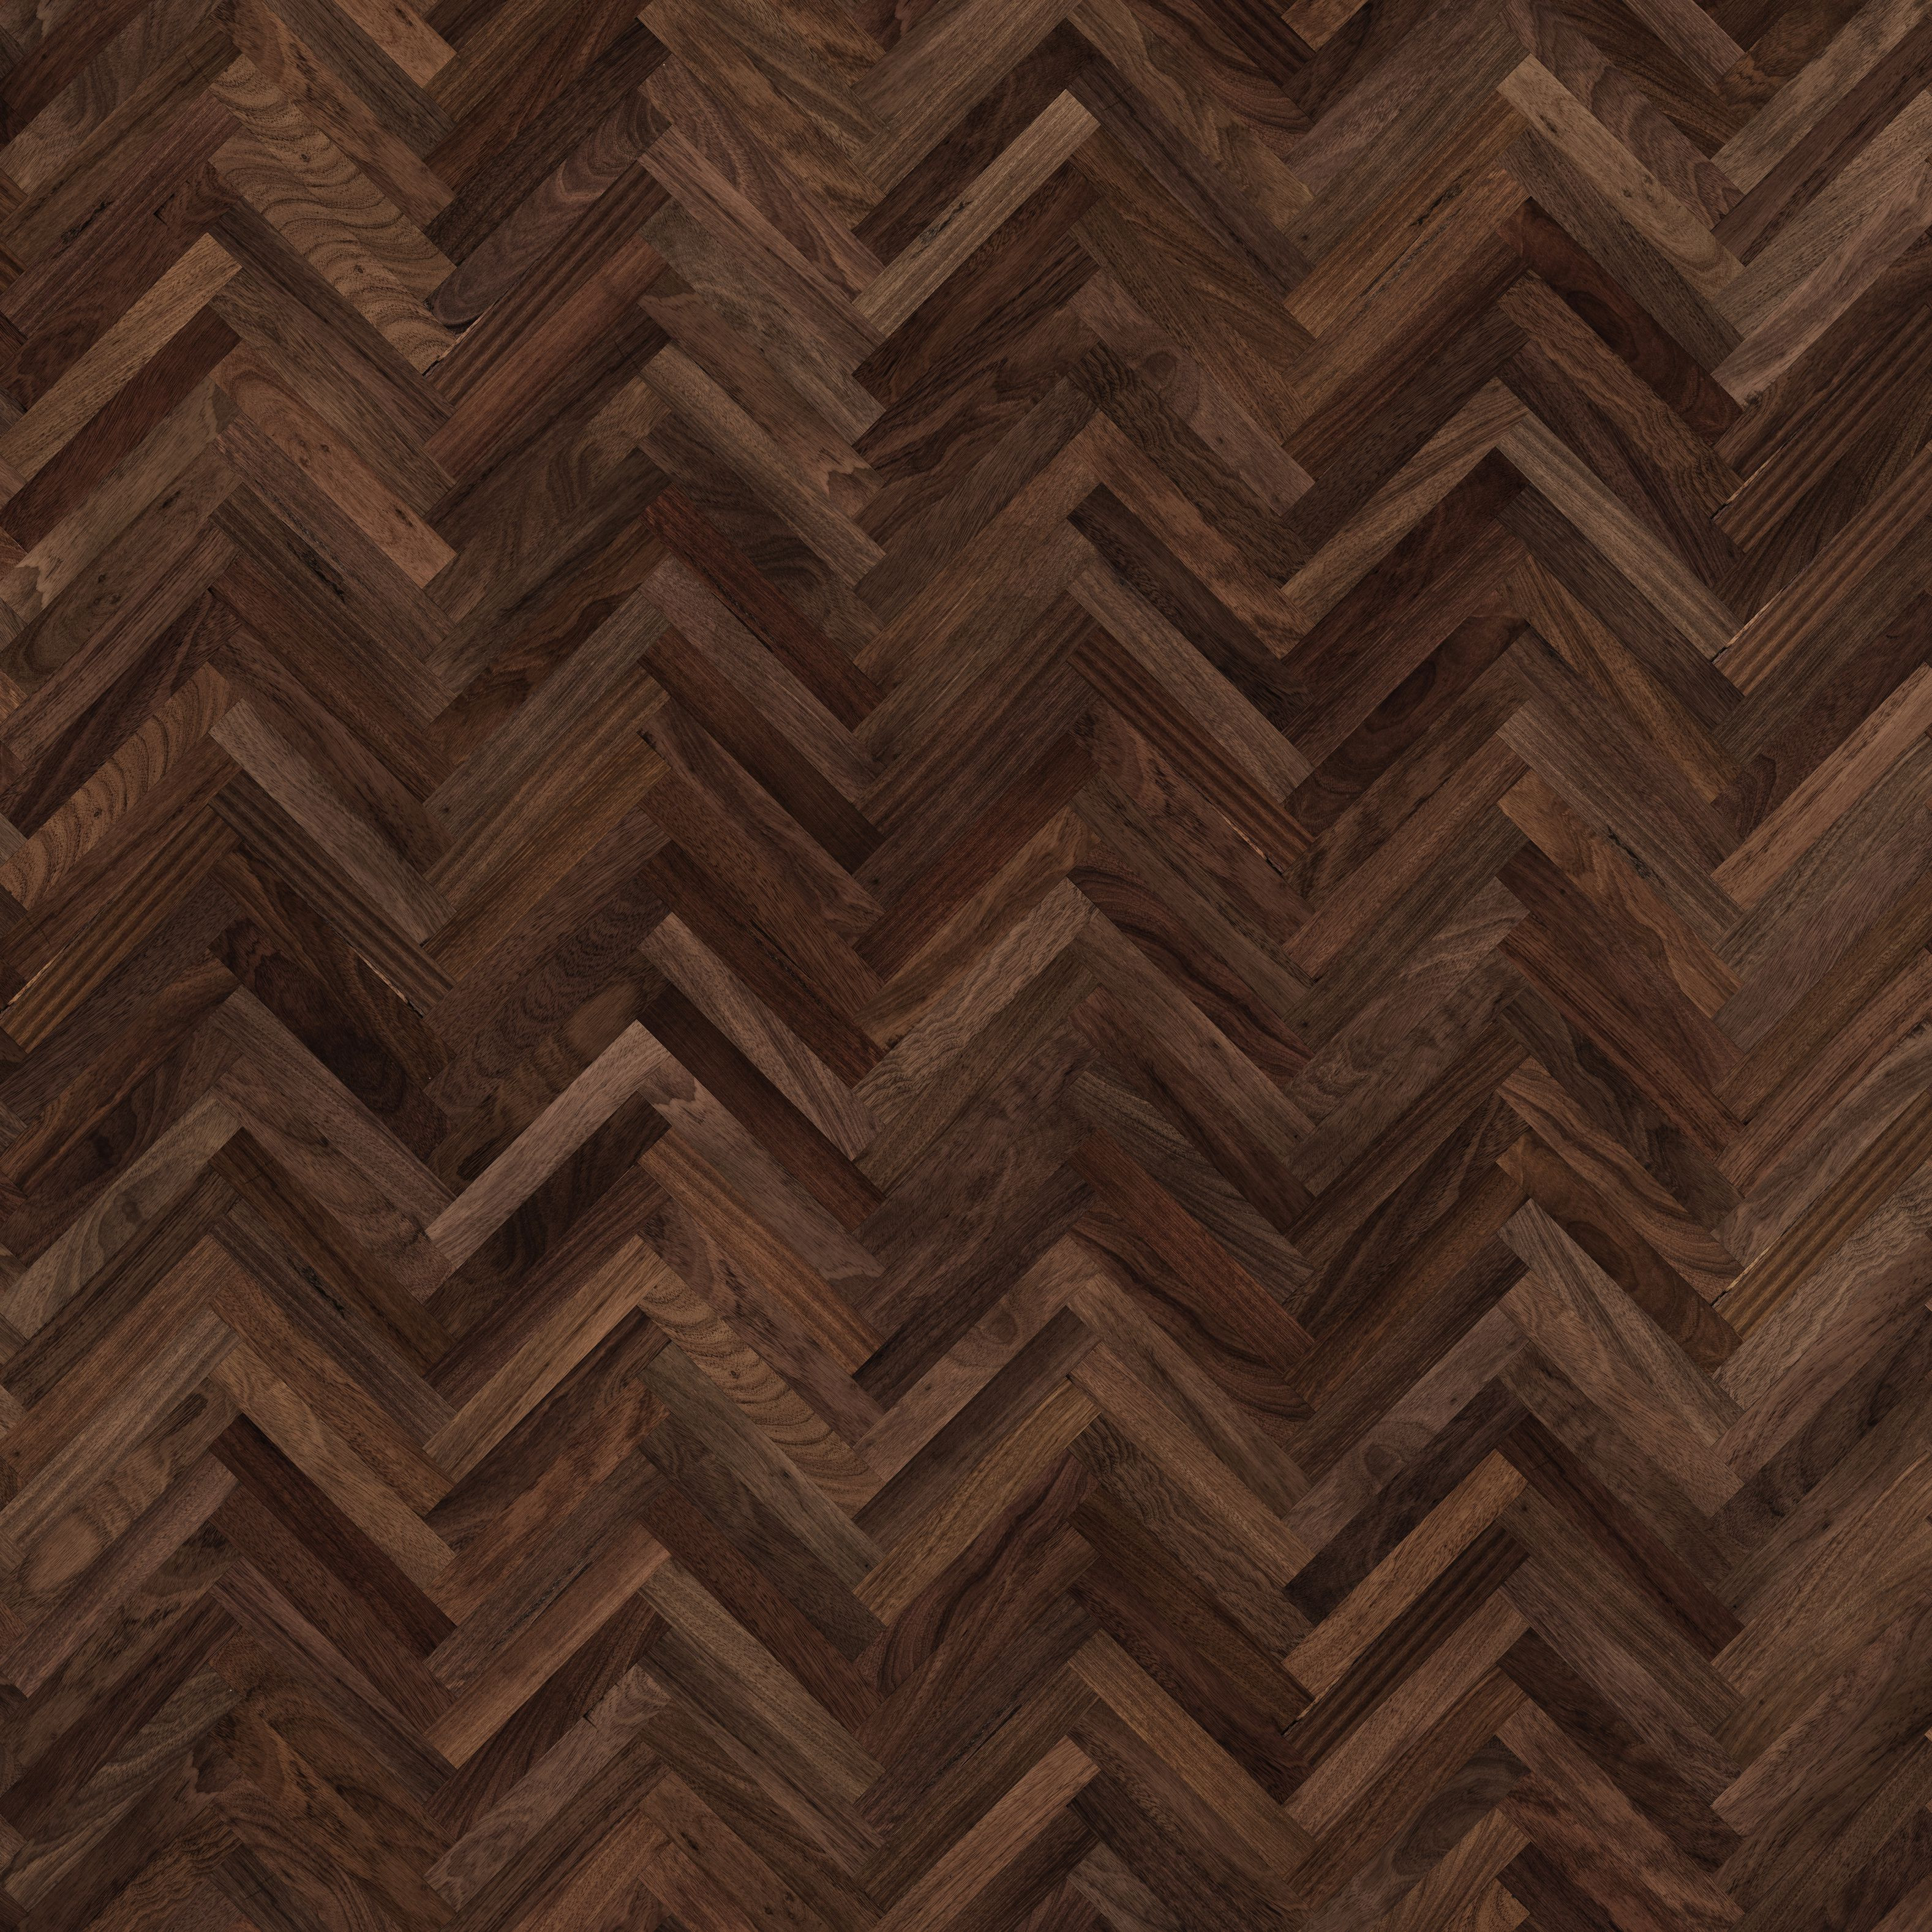 5 Inch Oak Hardwood Flooring Of Parquet Wood Flooring with Dark Brown Wood Background Xxxl 171110782 587c06b75f9b584db316fb21